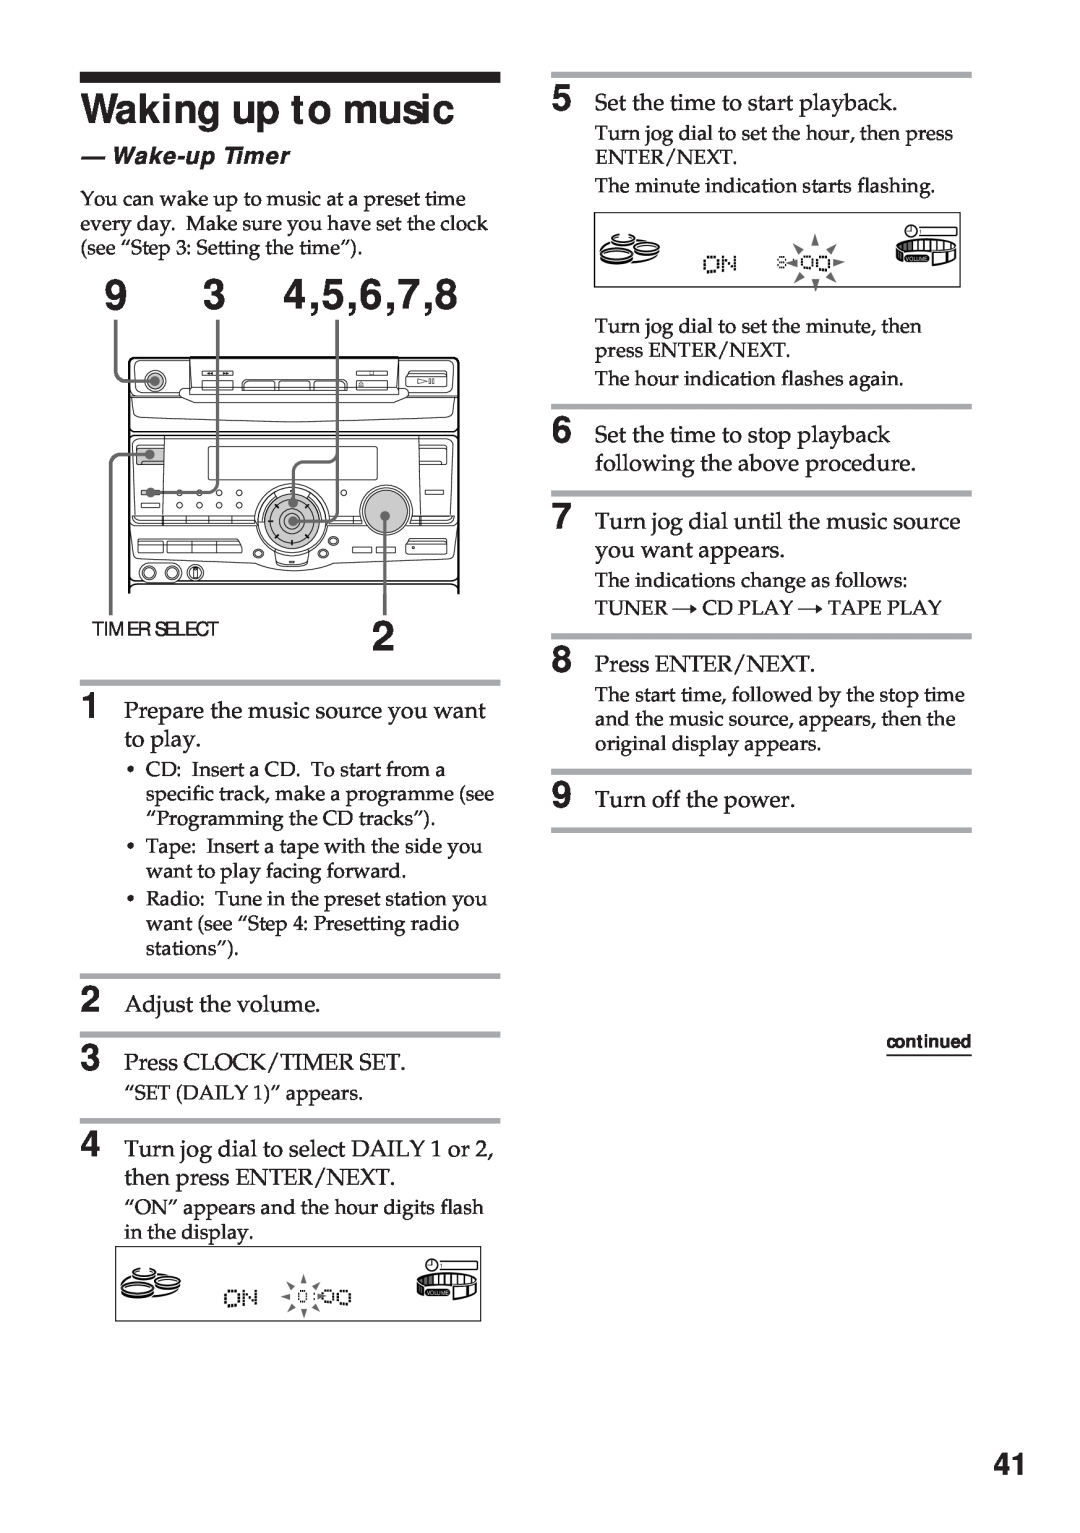 Sony MHC-RX100AV operating instructions Waking up to music, 9 3 4,5,6,7,8, Wake-upTimer 